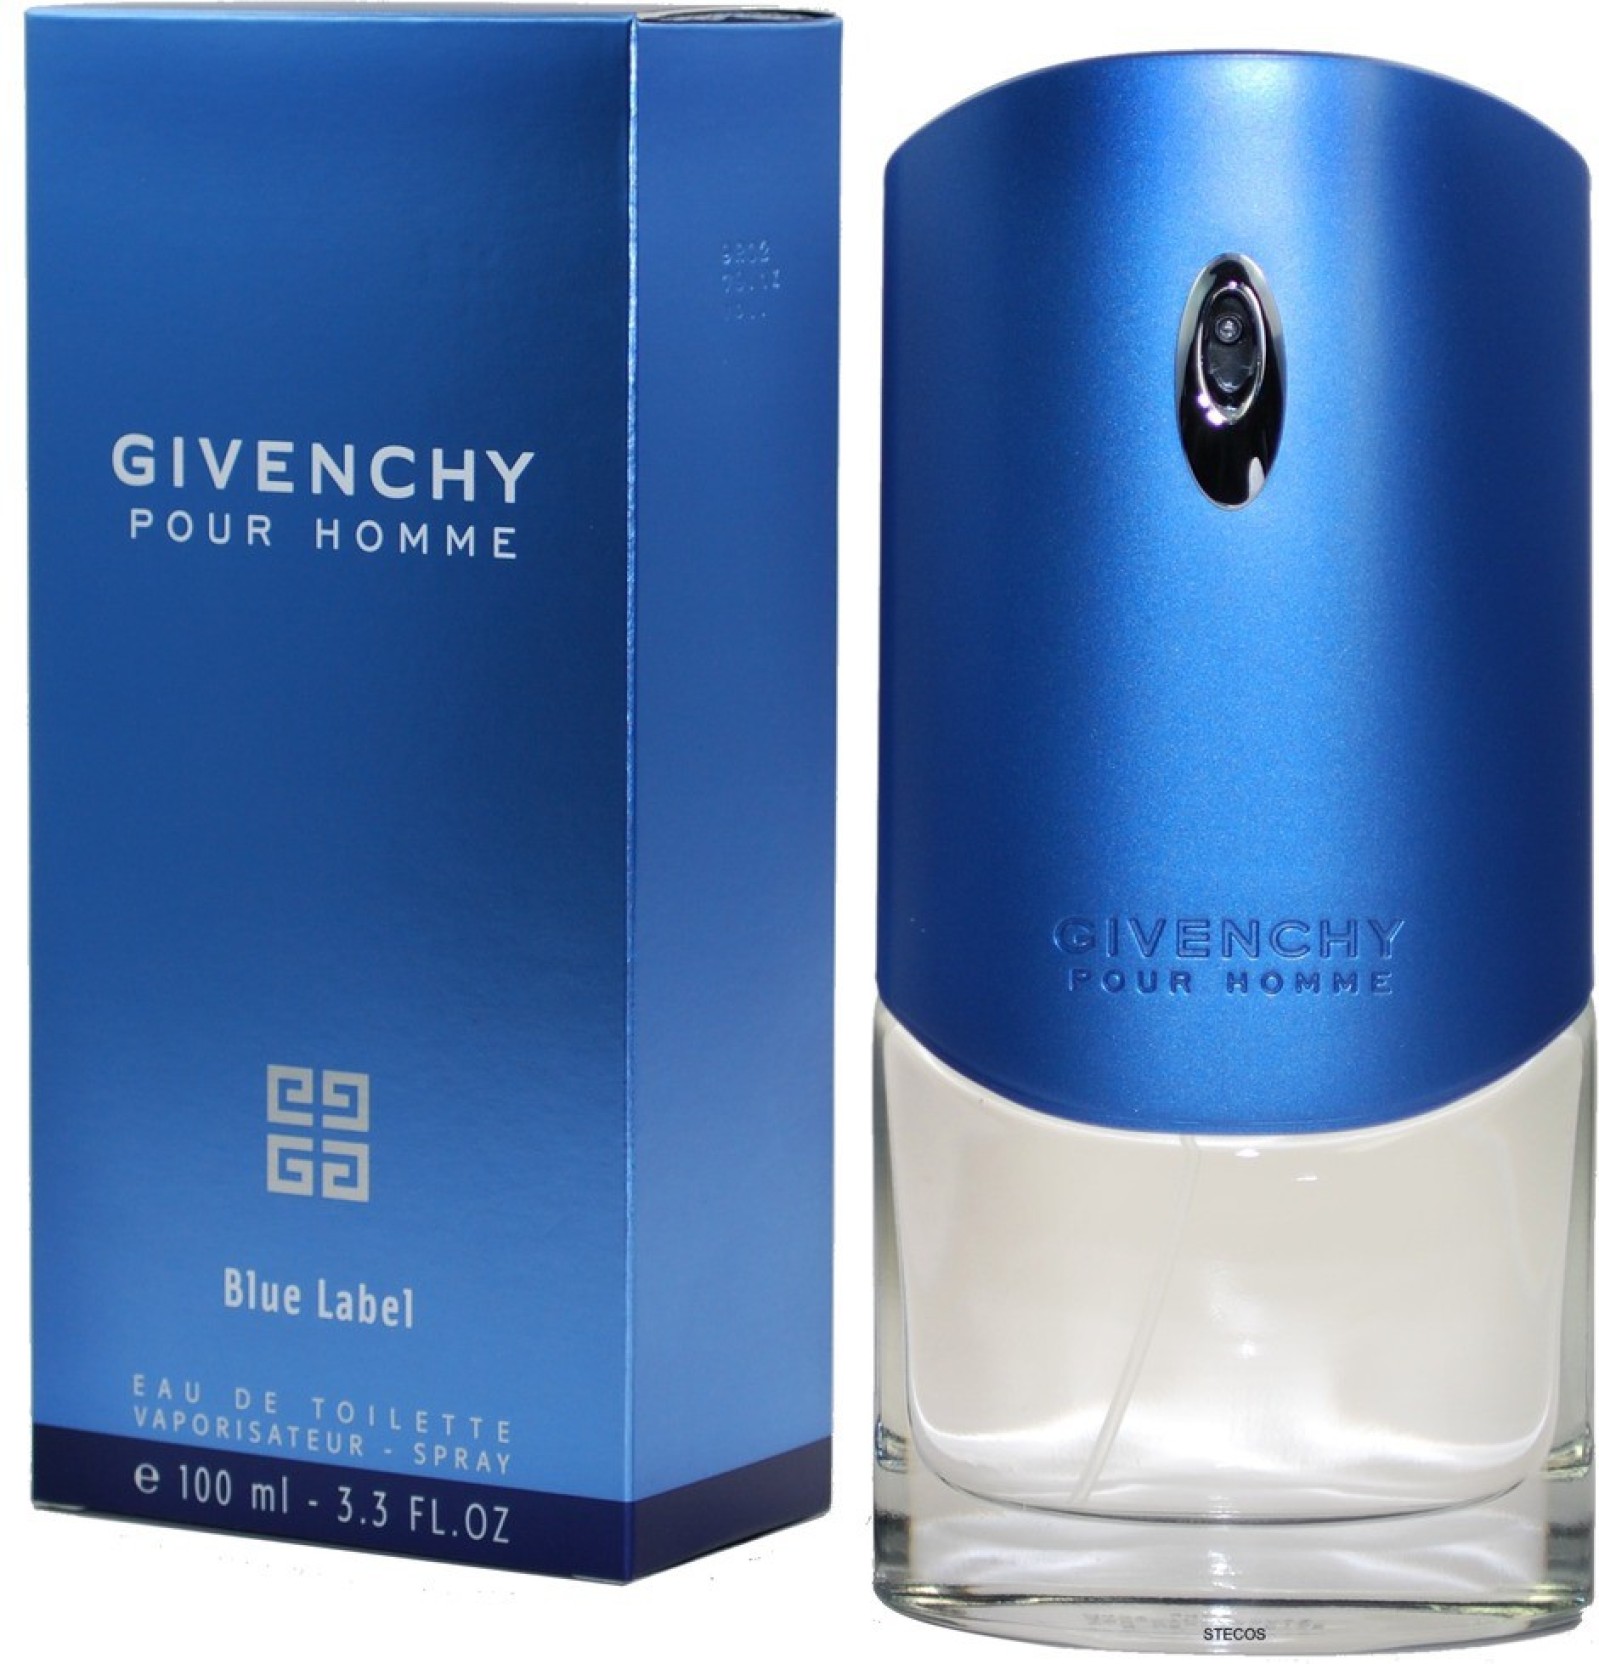 Blue label туалетная вода. Givenchy pour homme Blue Label. Givenchy Blue Label 100ml. Givenchy pour homme Blue Label Givenchy. Givenchy pour homme Blue Label EDT, 100 ml.